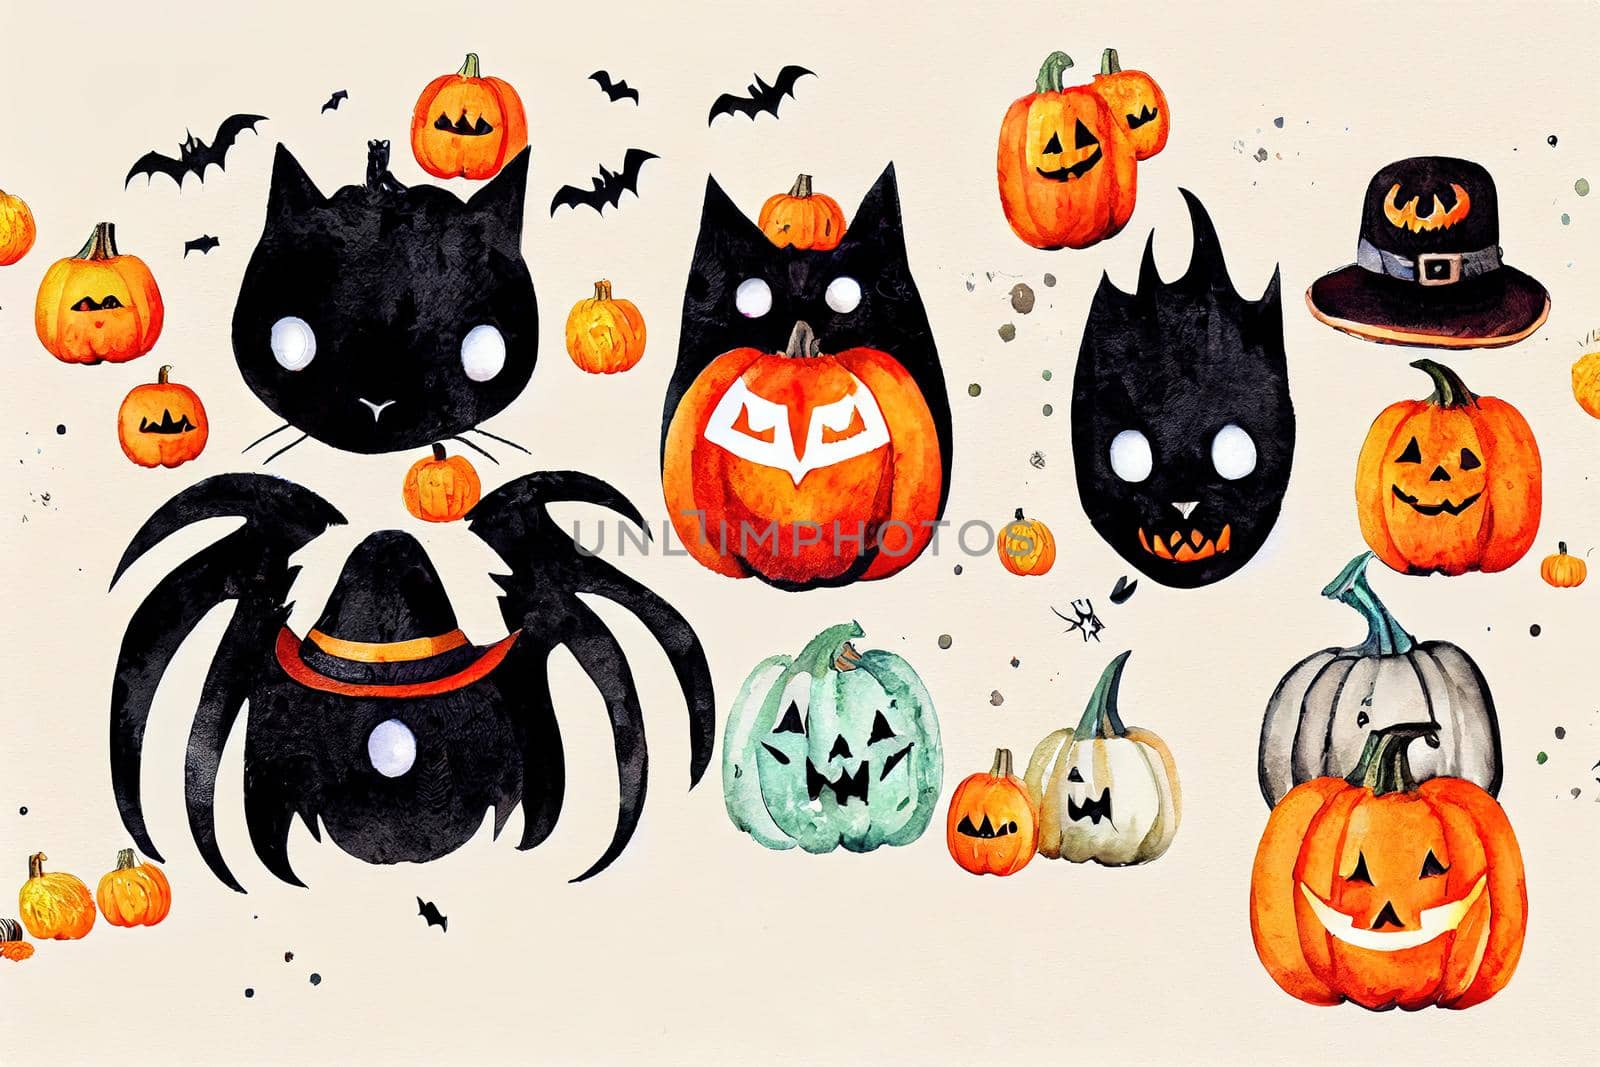 Black cat, ghosts, pumpkin, hat, monsters by 2ragon